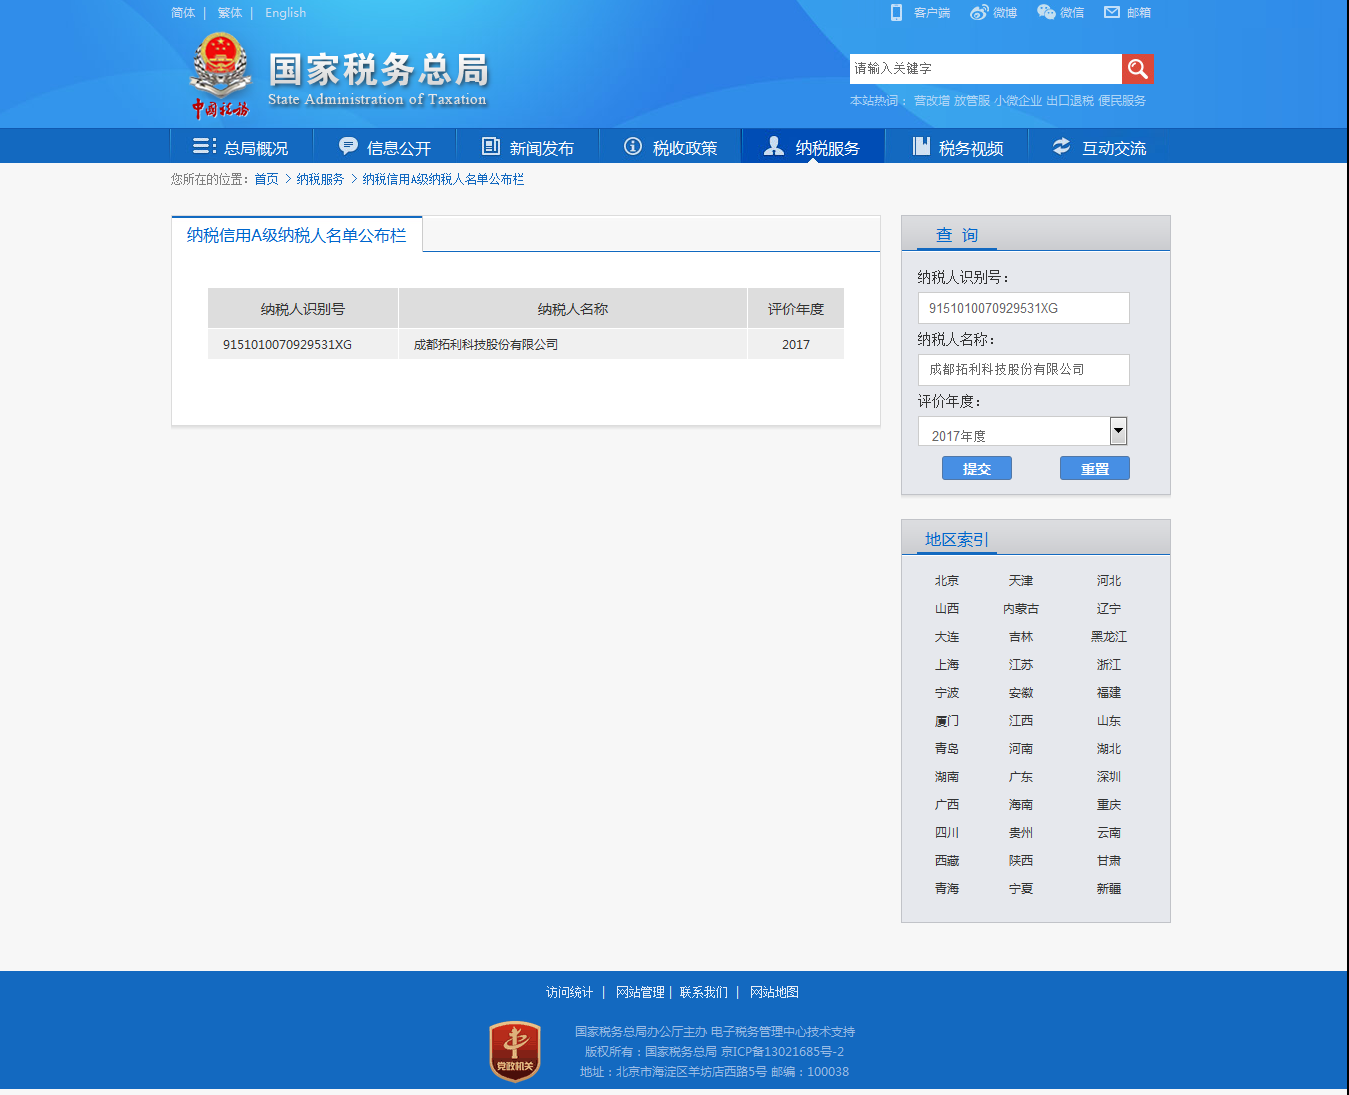 Taxpayer credit rating information of Chengdu Tuoli Technology Co., Ltd.